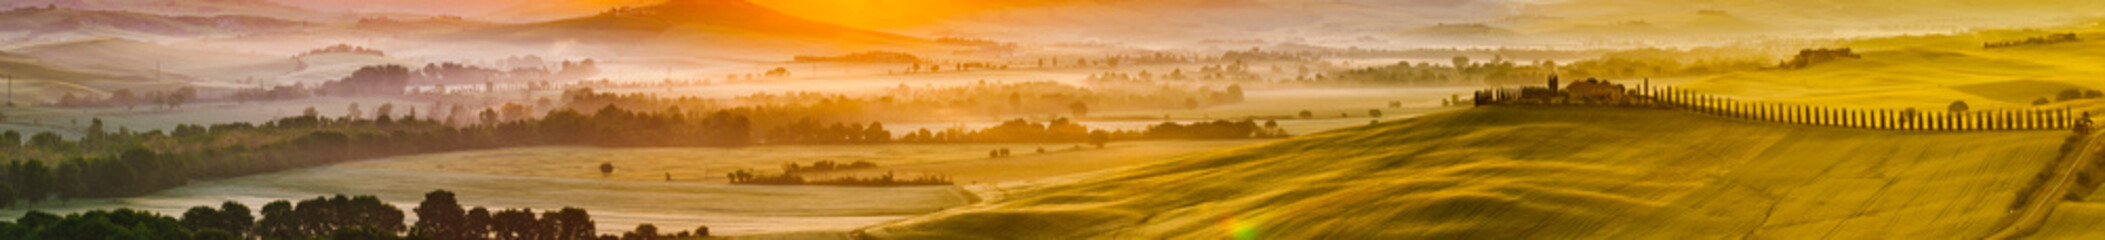 Tuscany, Italy landscape. Super high quality panorama taken at wonderful sunrise. Vineyards, hills, farm house. - Powered by Adobe